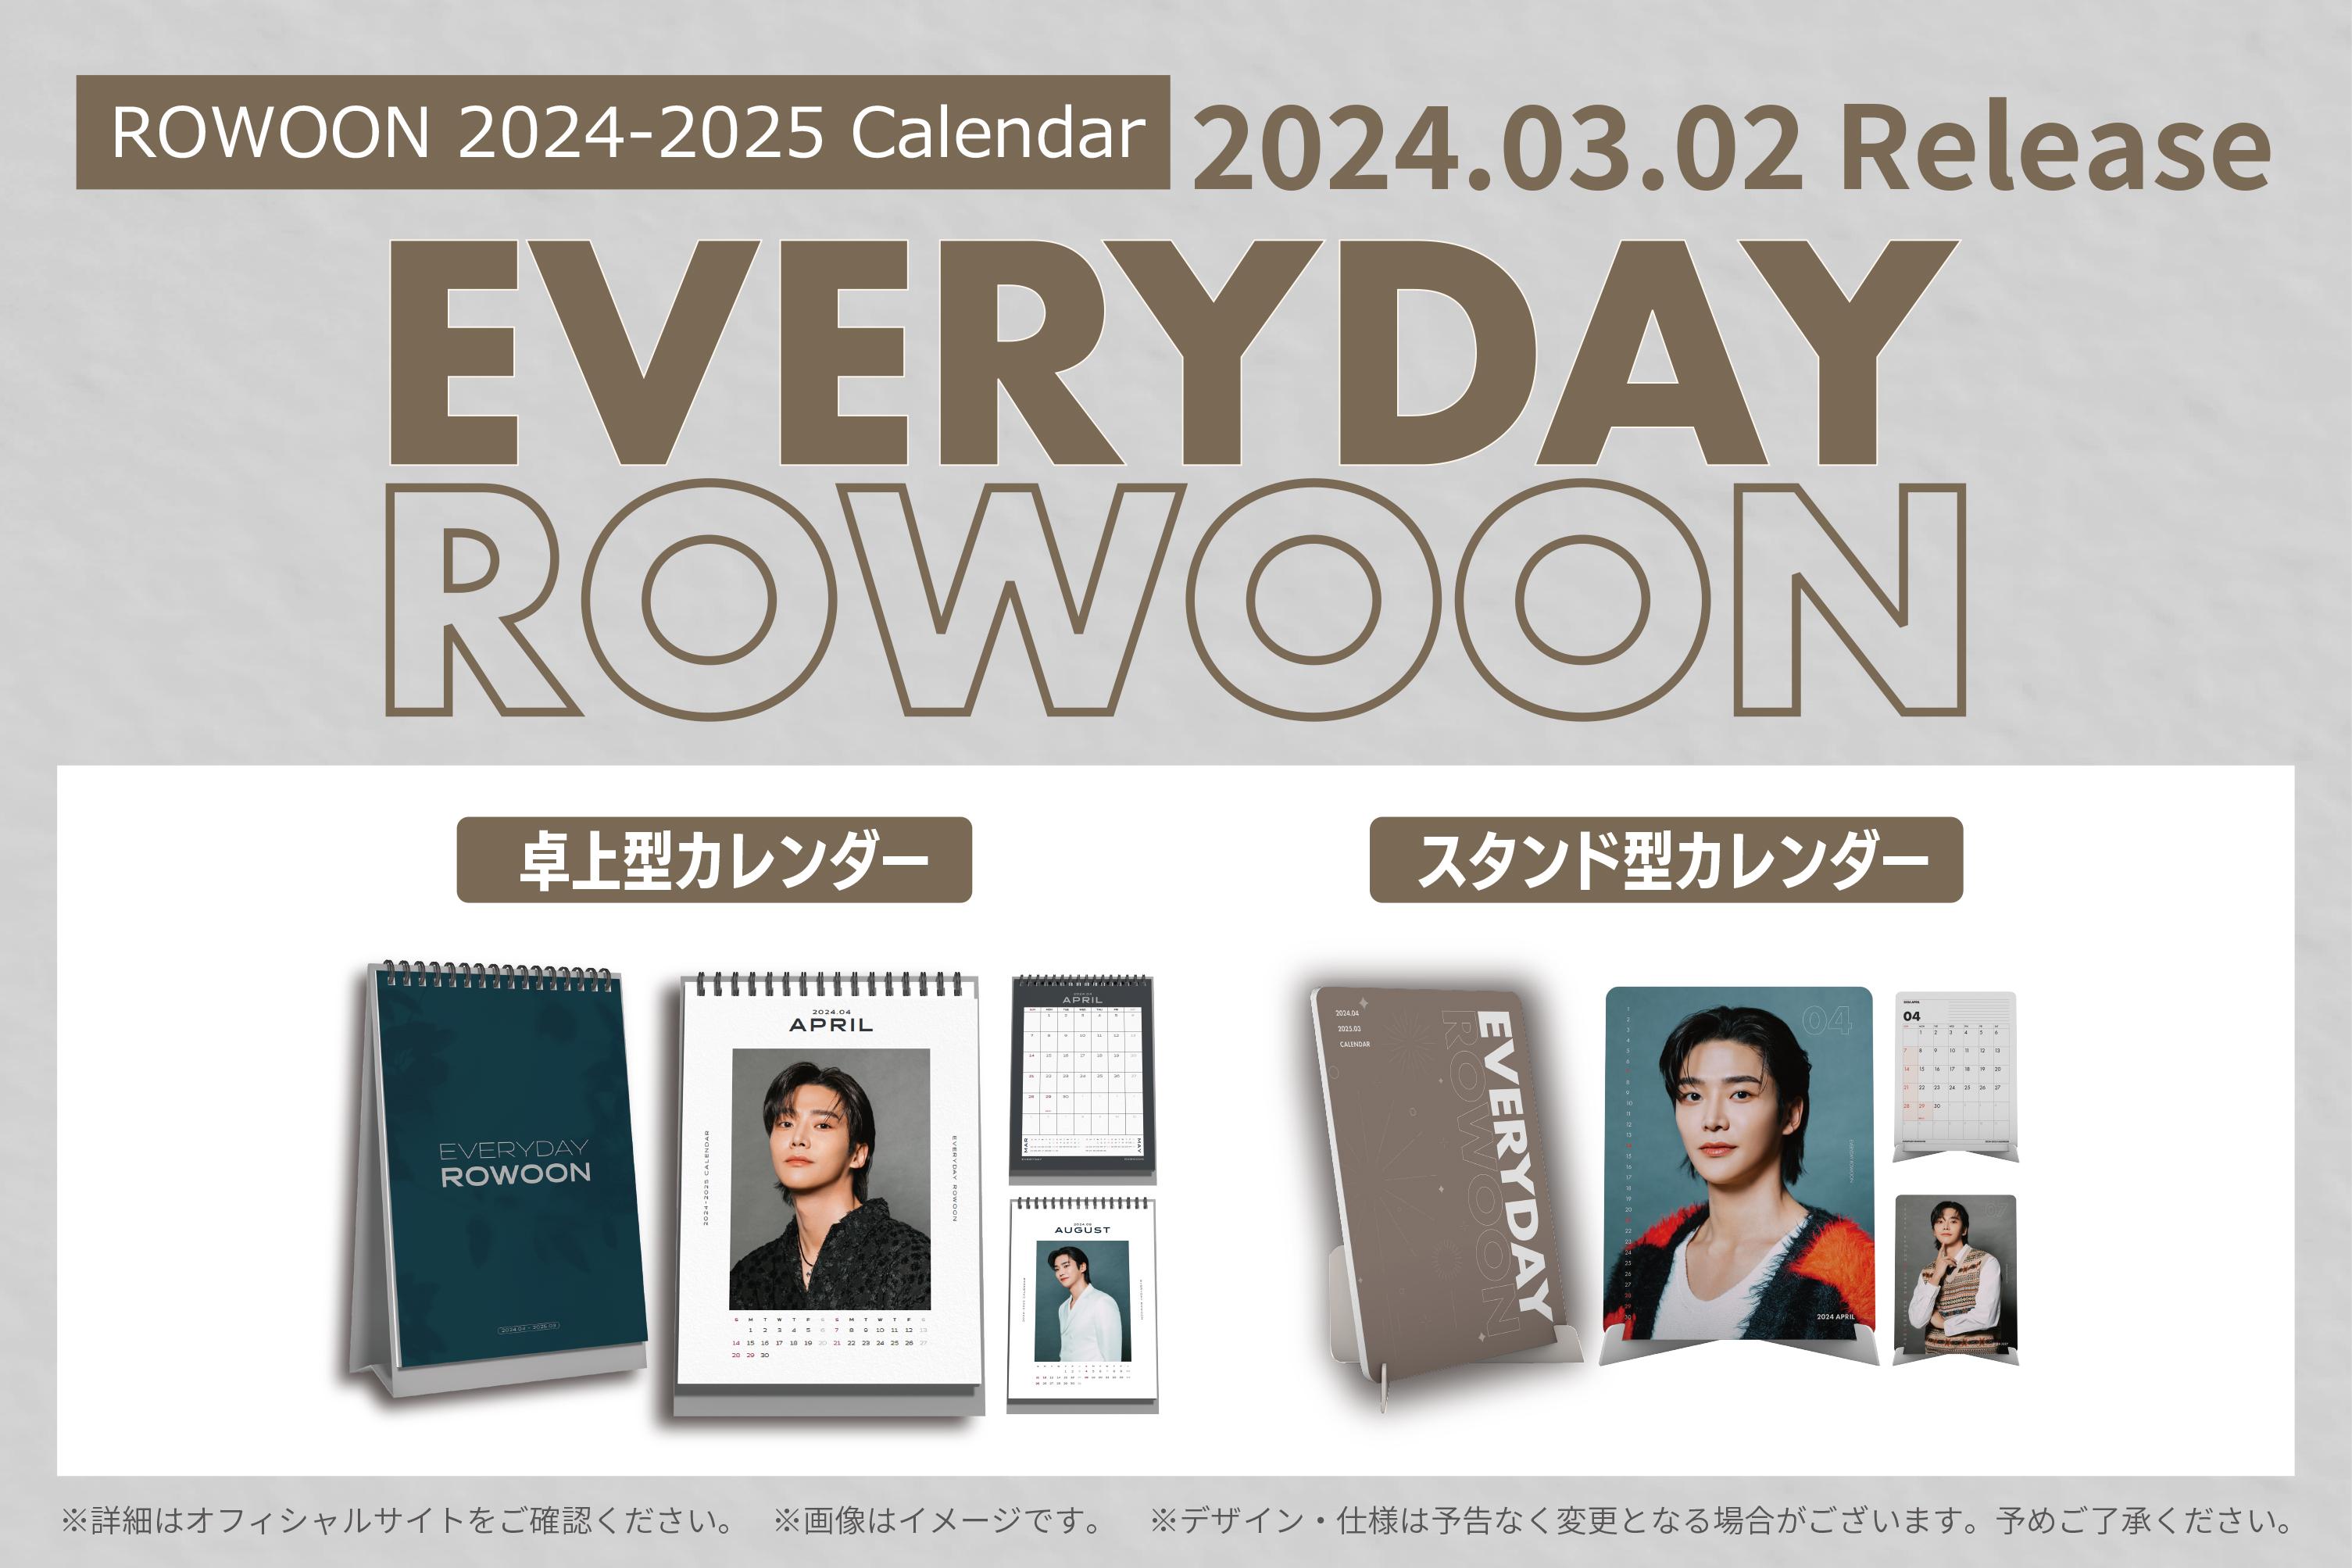 ROWOON 2024-2025 Calendar [Everyday ROWOON]